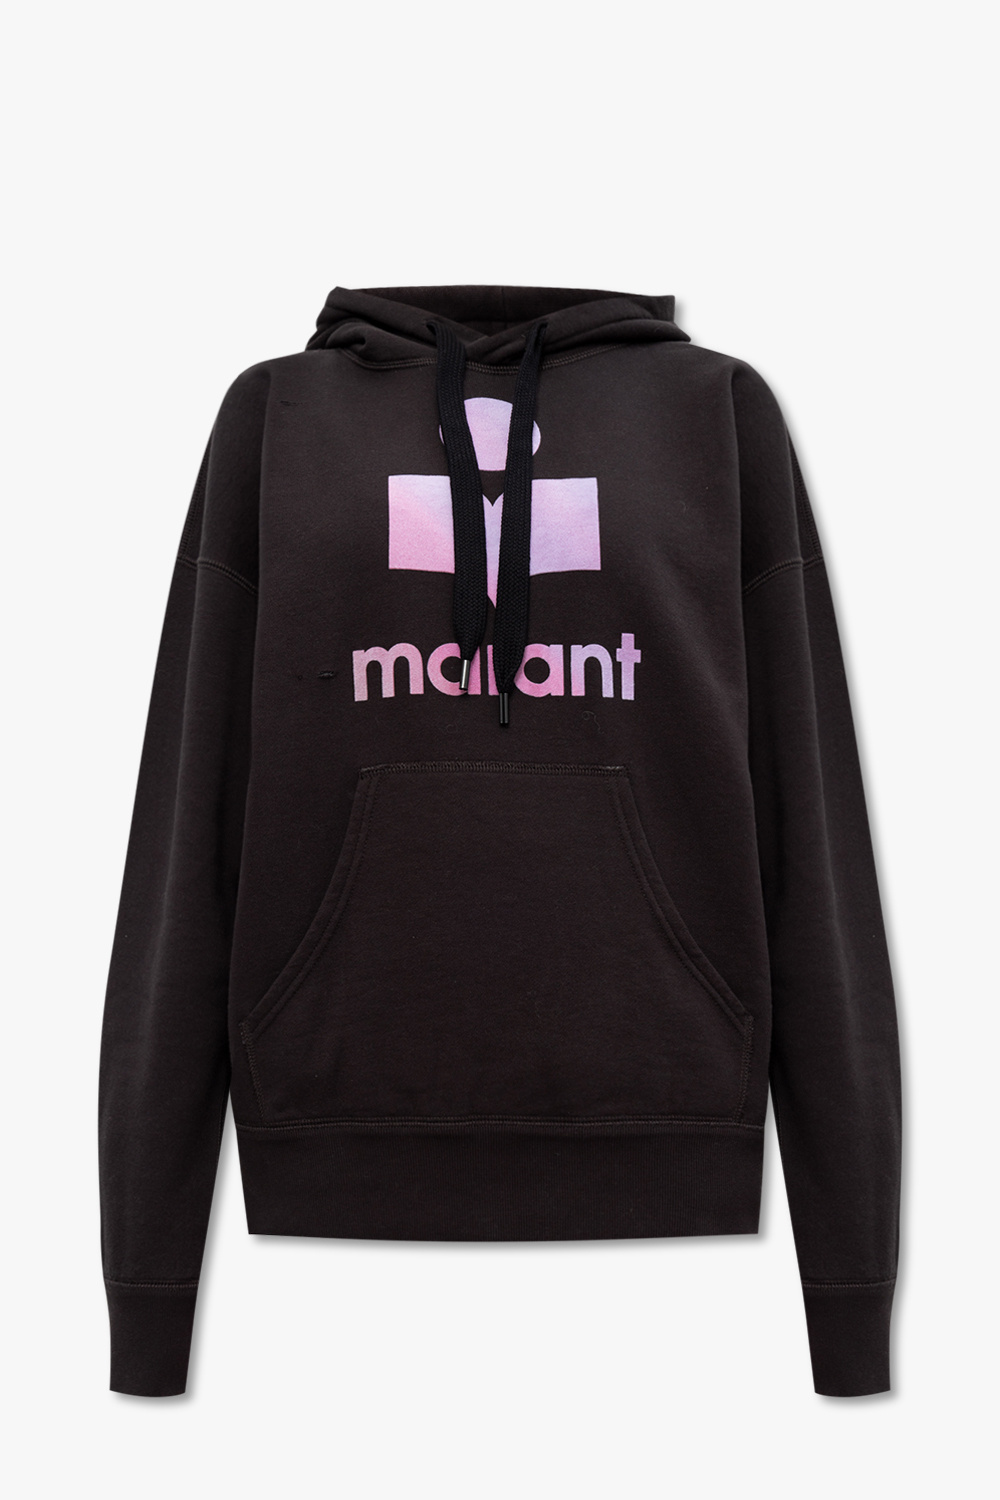 versace kids medusa print crewneck t shirt item ‘Mansel’ hoodie